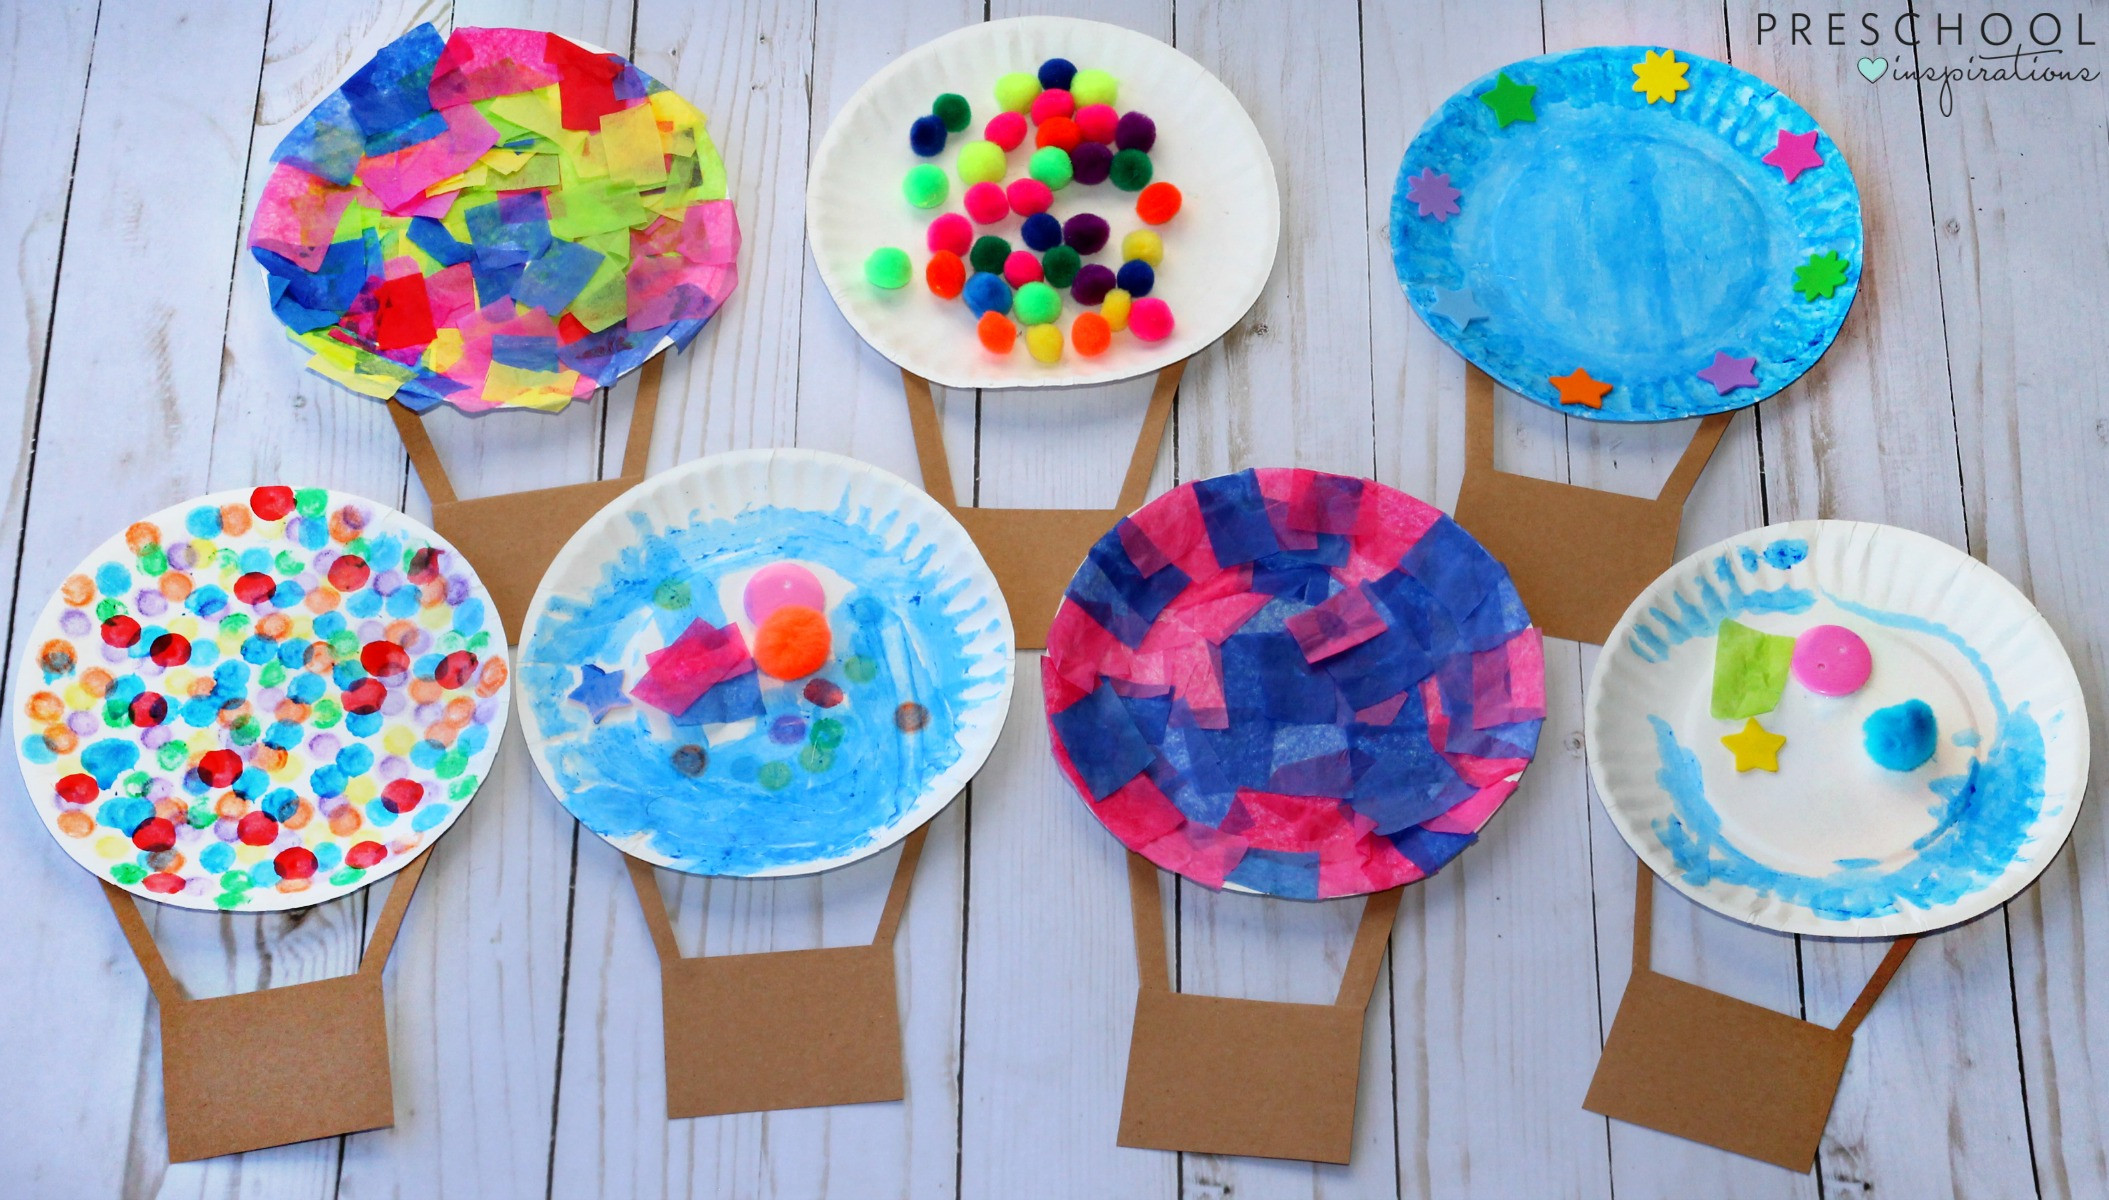 Best ideas about Preschool Art Projects
. Save or Pin Hot Air Balloon Process Art Activity Preschool Inspirations Now.